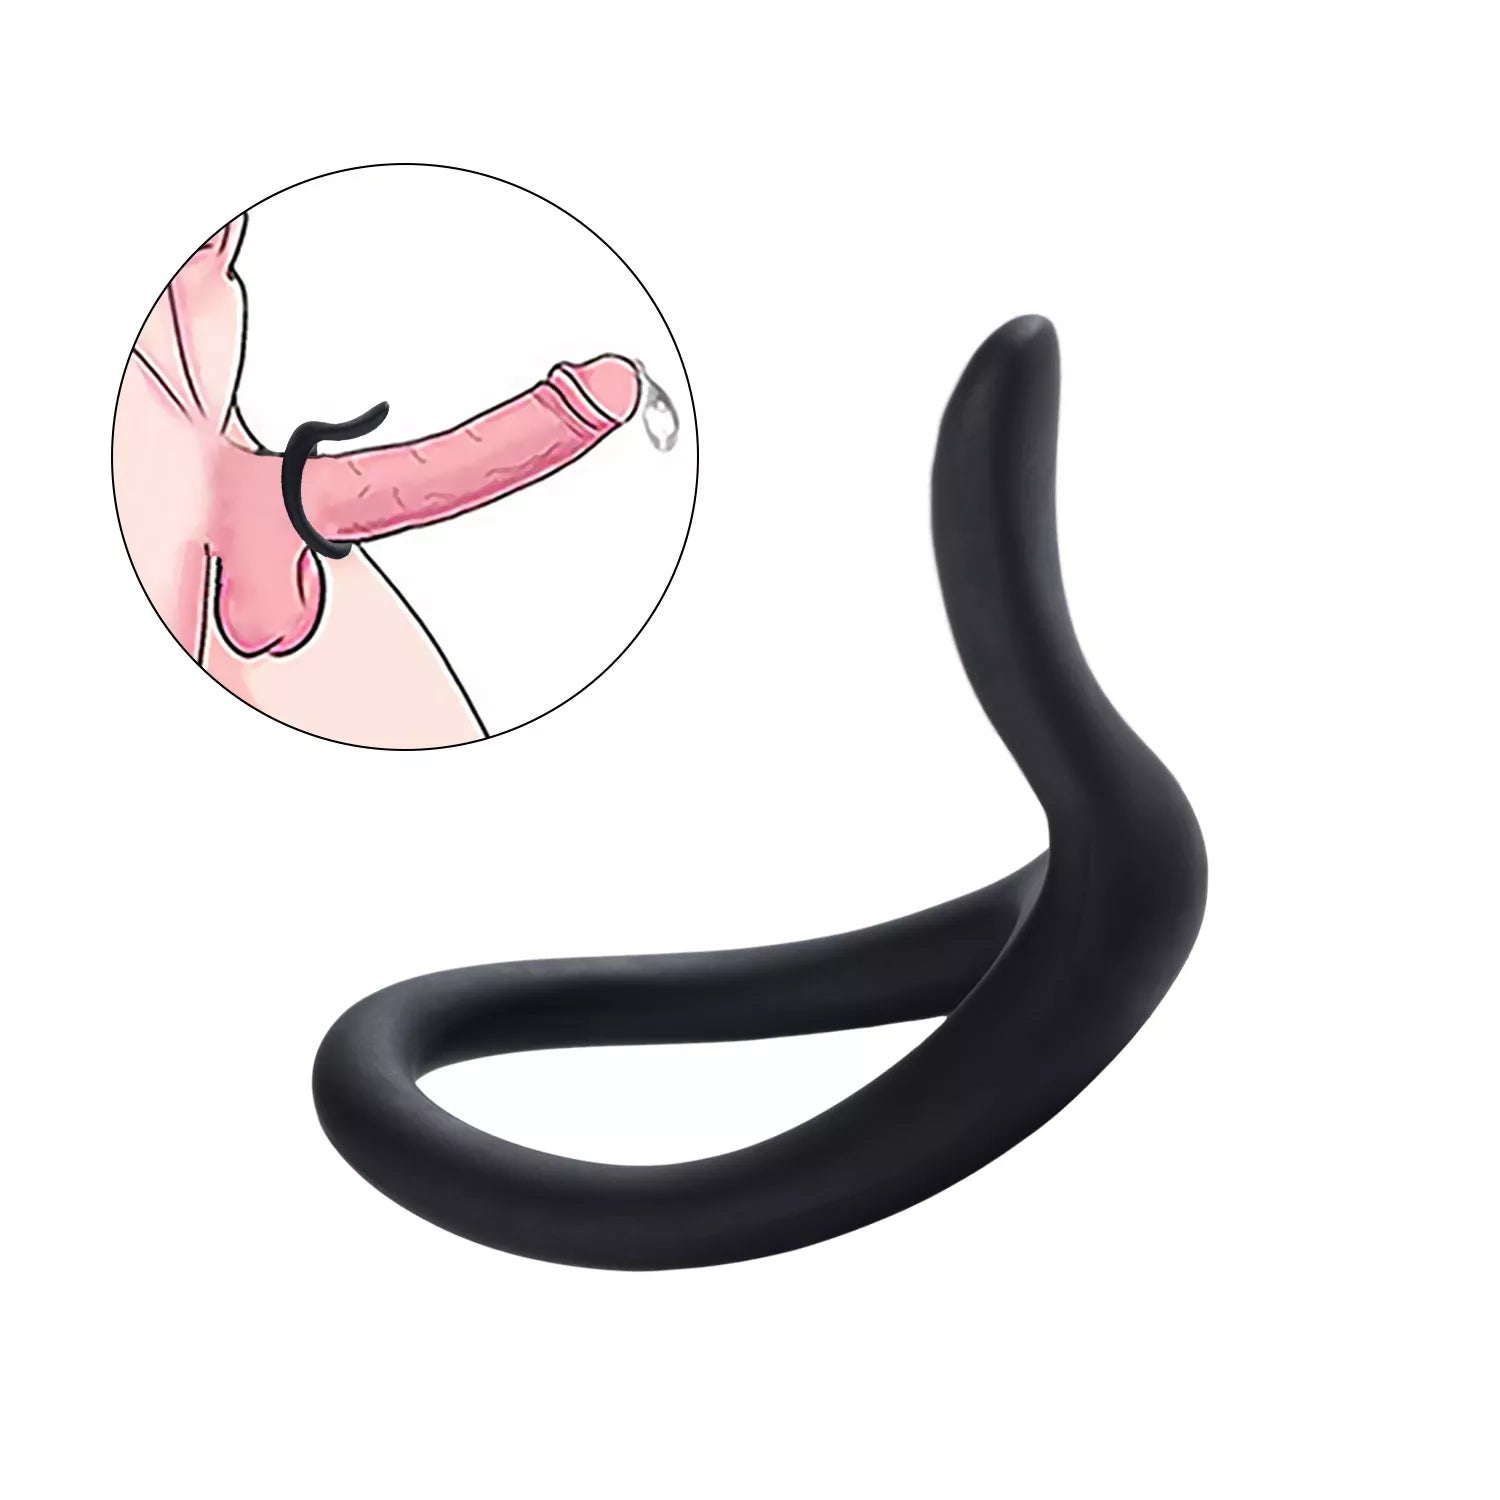 Uri - Black Penis Cock Ring Male Enhancer